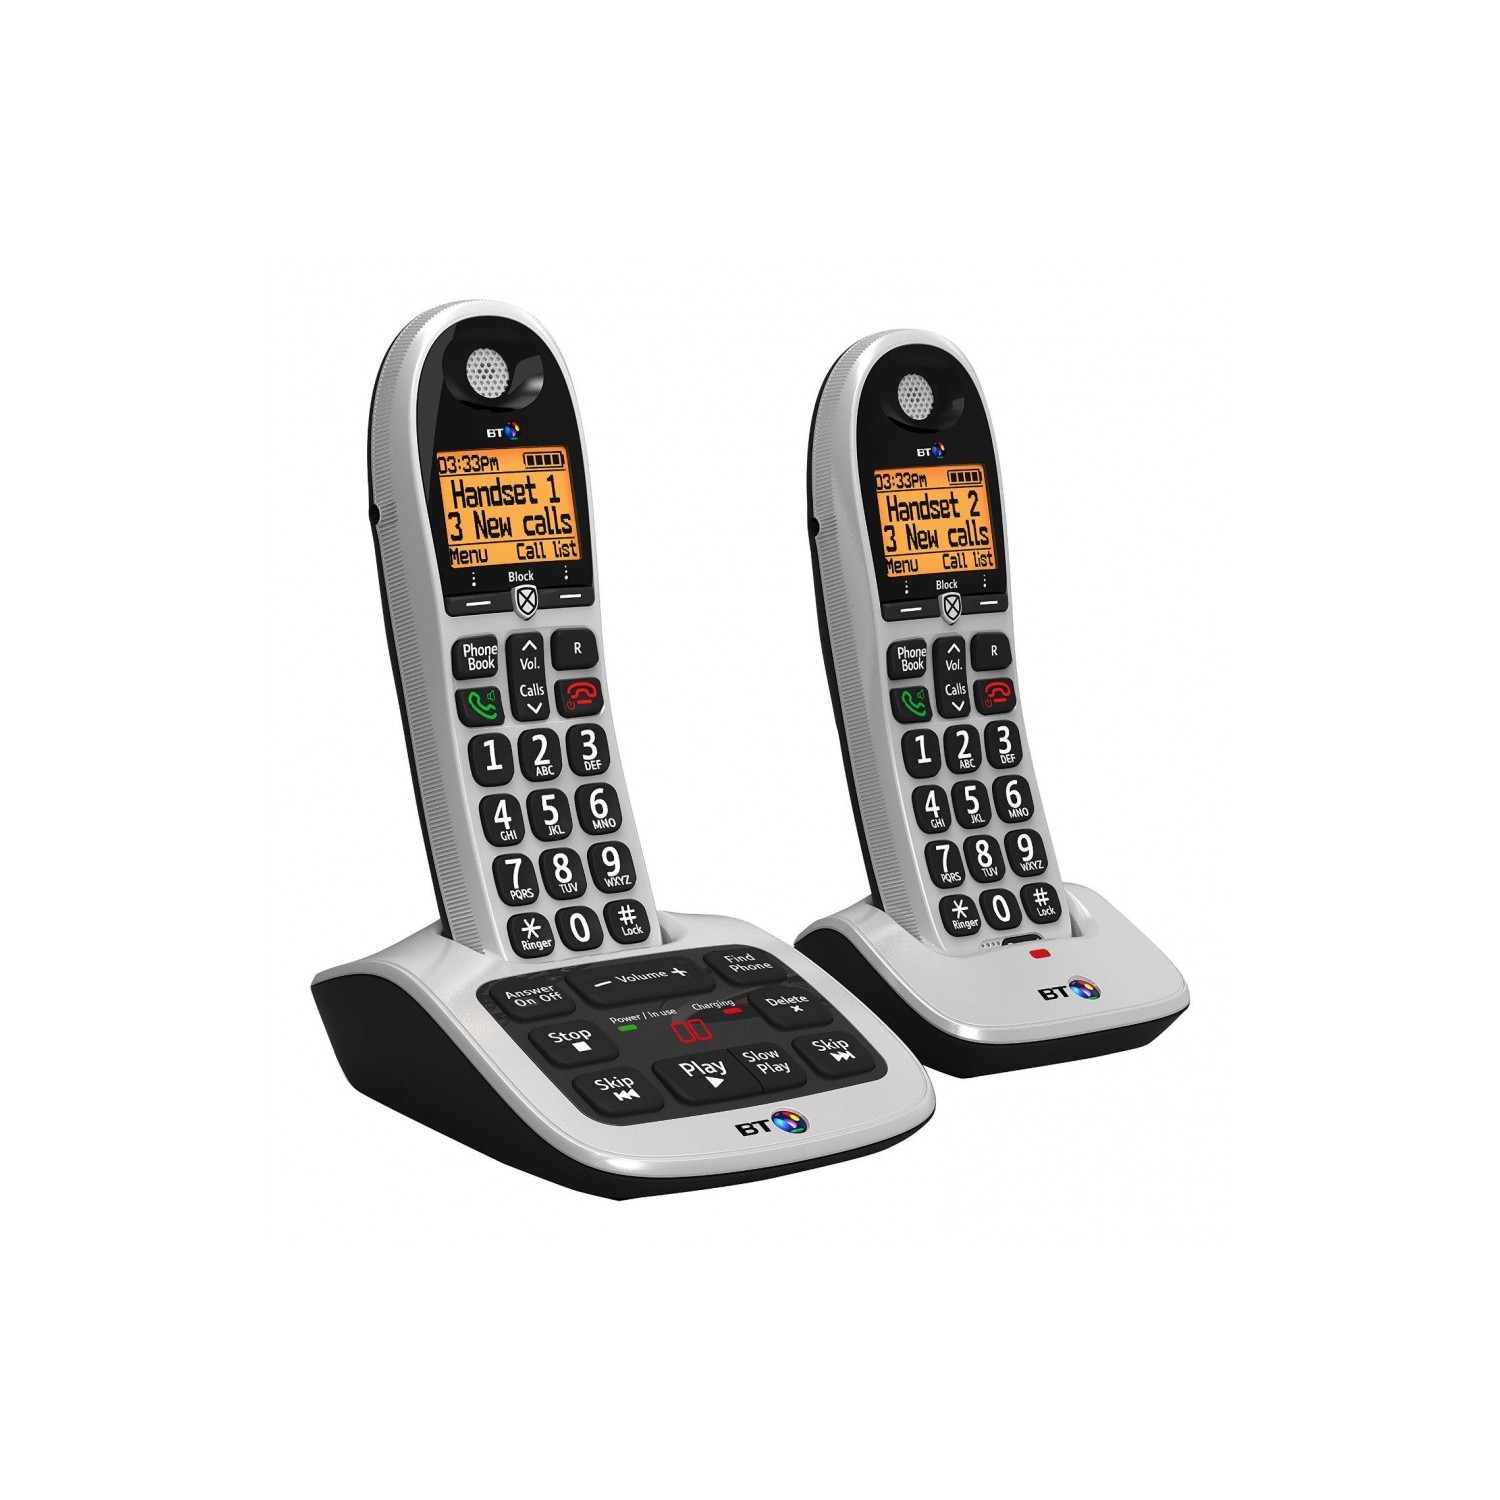 Panasonic Triple Cordless Phone With Answer Machine (silver) - E B